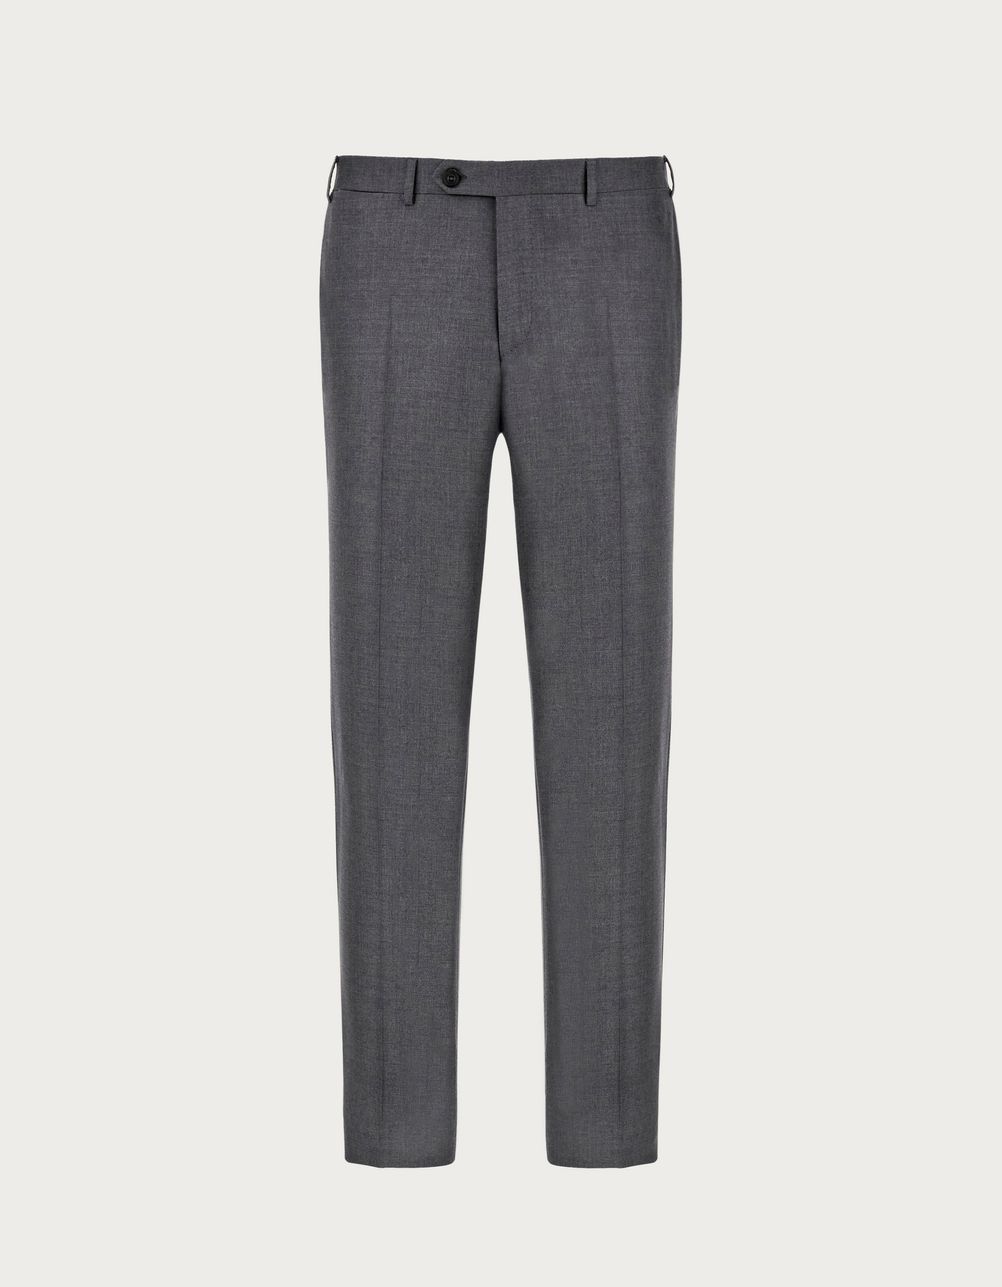 Grey pants in 150's wool - Exclusive